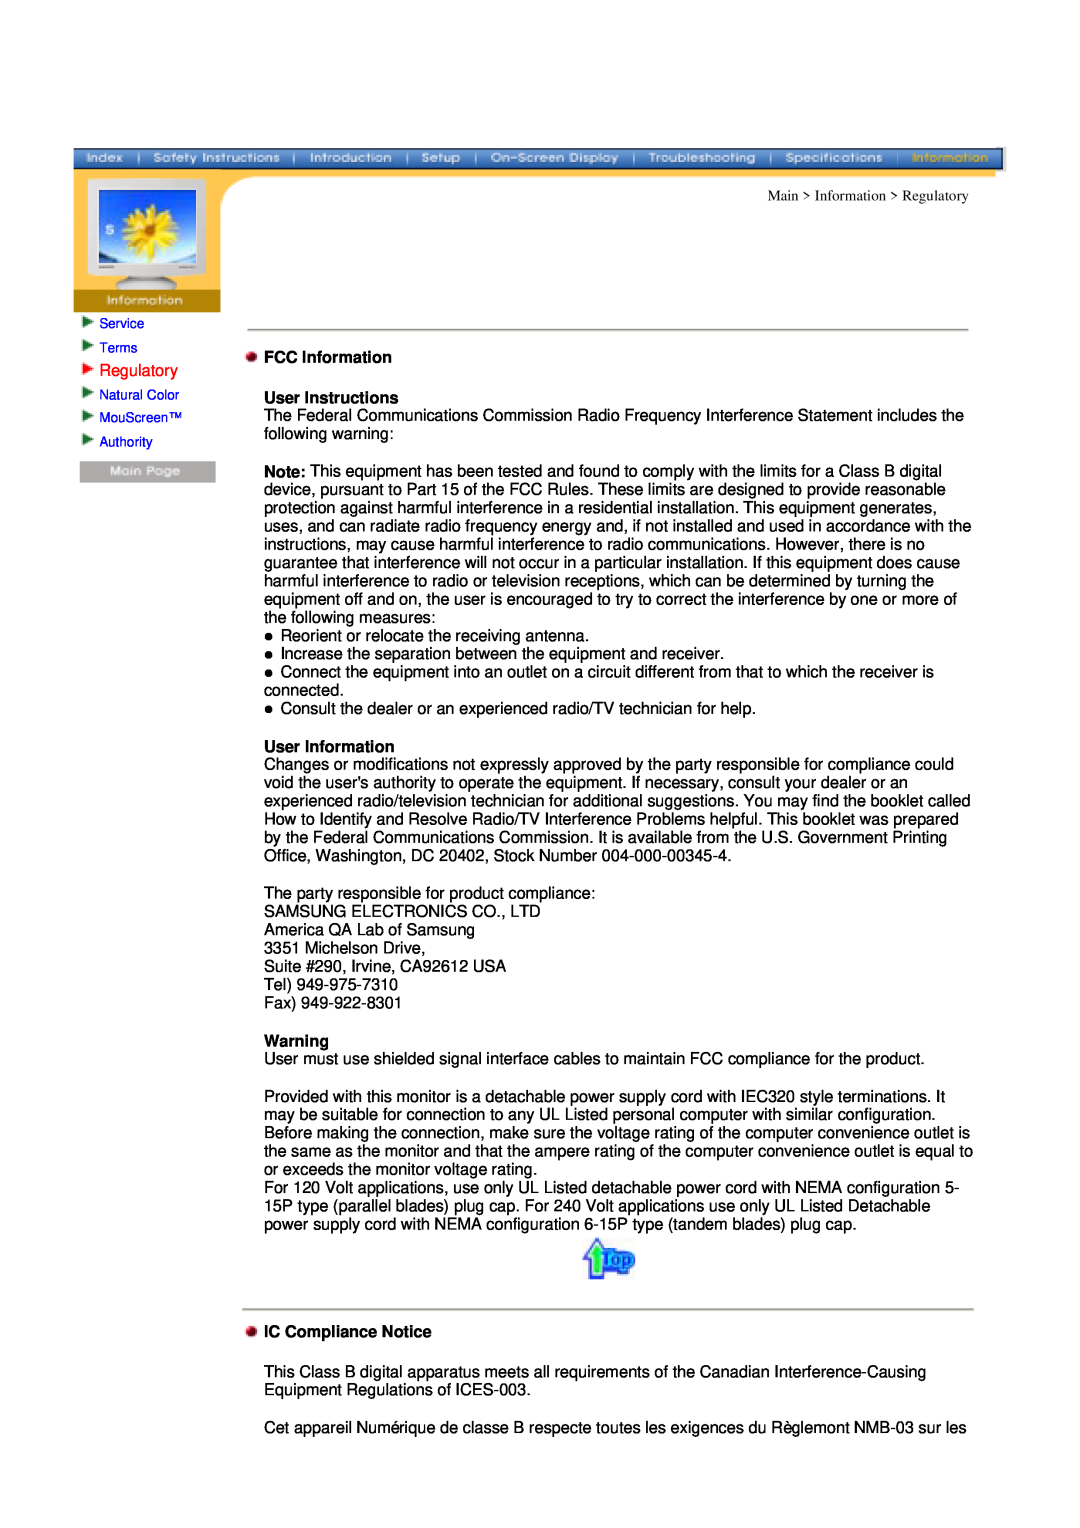 Samsung 957D manual Regulatory, FCC Information User Instructions, User Information, IC Compliance Notice 